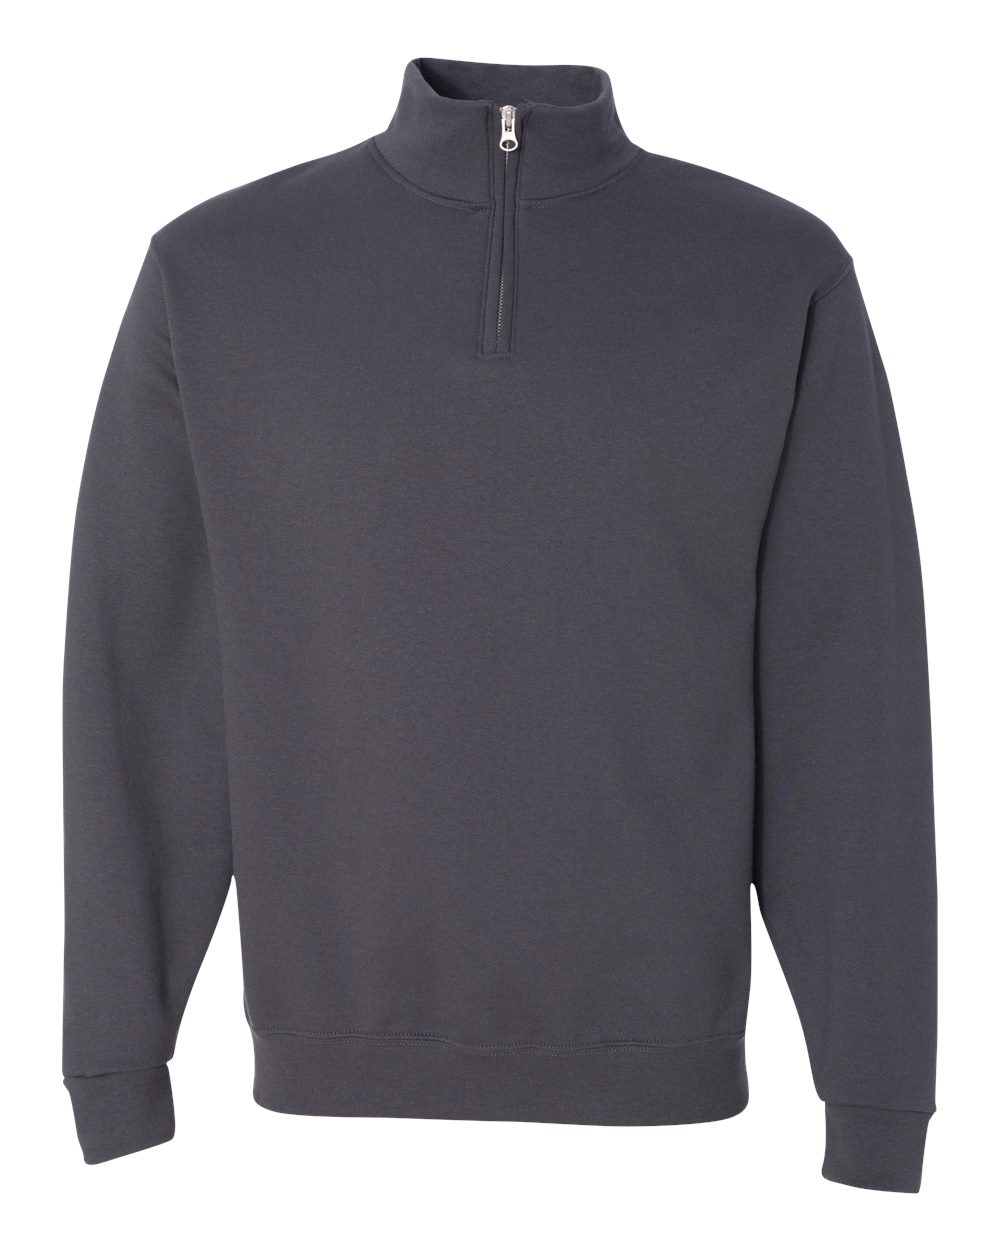 JERZEES 995M - 8 Ounce 50/50 Cadet Collar Sweatshirt $15.01 - Sweatshirts